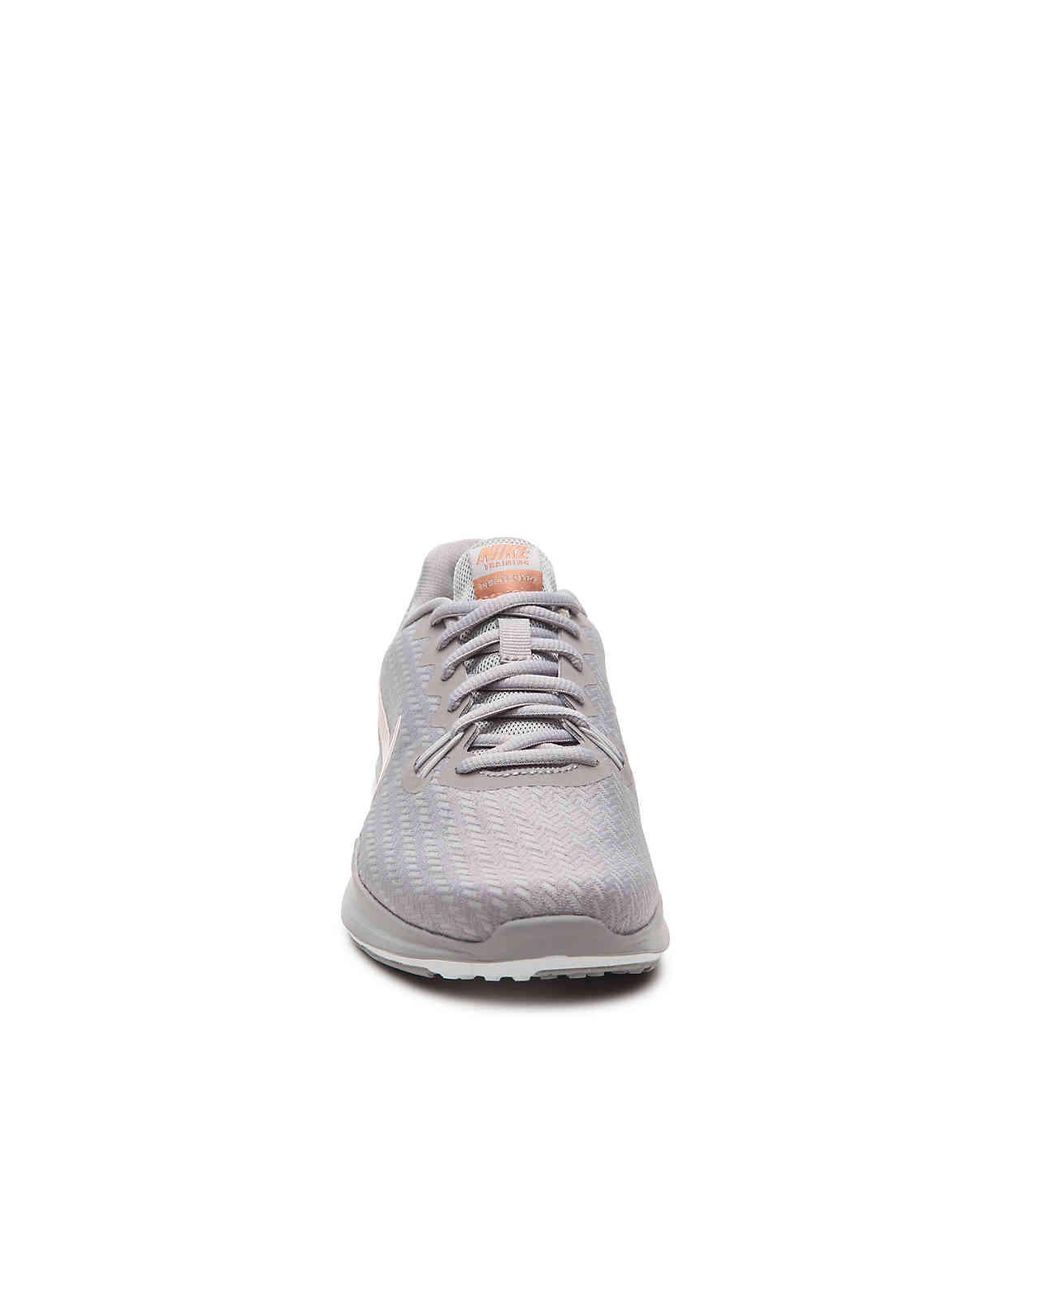 Nike Synthetic In Season Tr 7 Performance Training Shoe in Grey/Rose Gold  Metallic (Gray) | Lyst